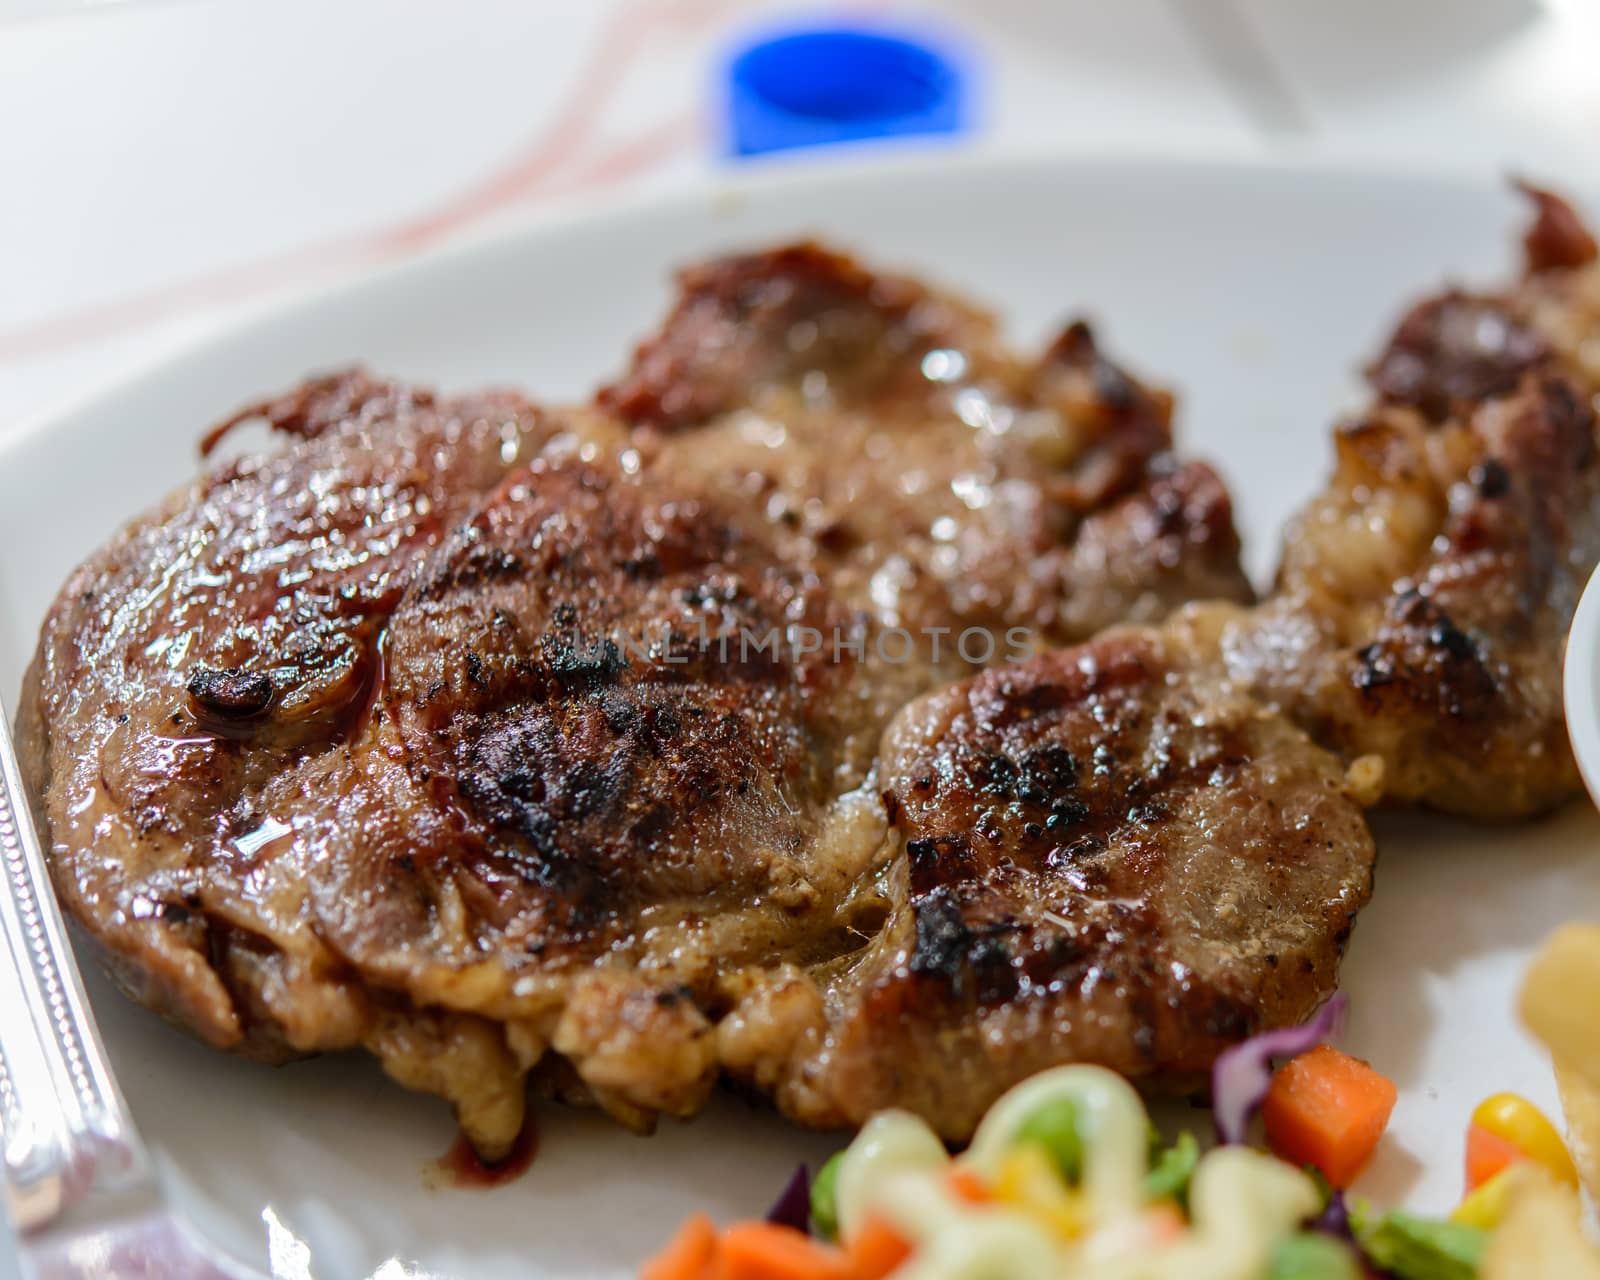 Beef steak on plate.Soft focus.